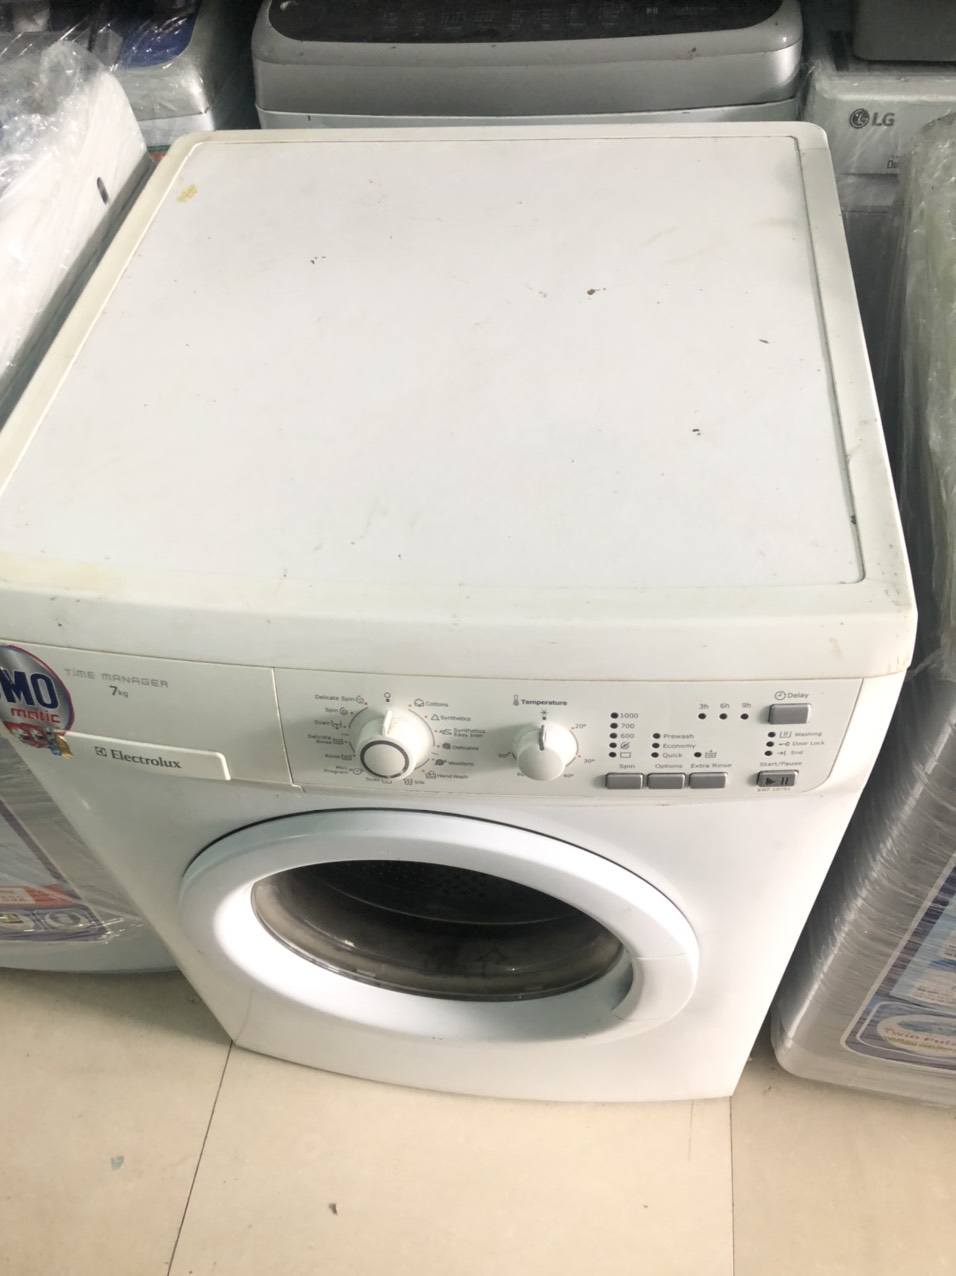 Hướng dẫn cách lắp đặt máy giặt Electrolux từng bước từ A - Z